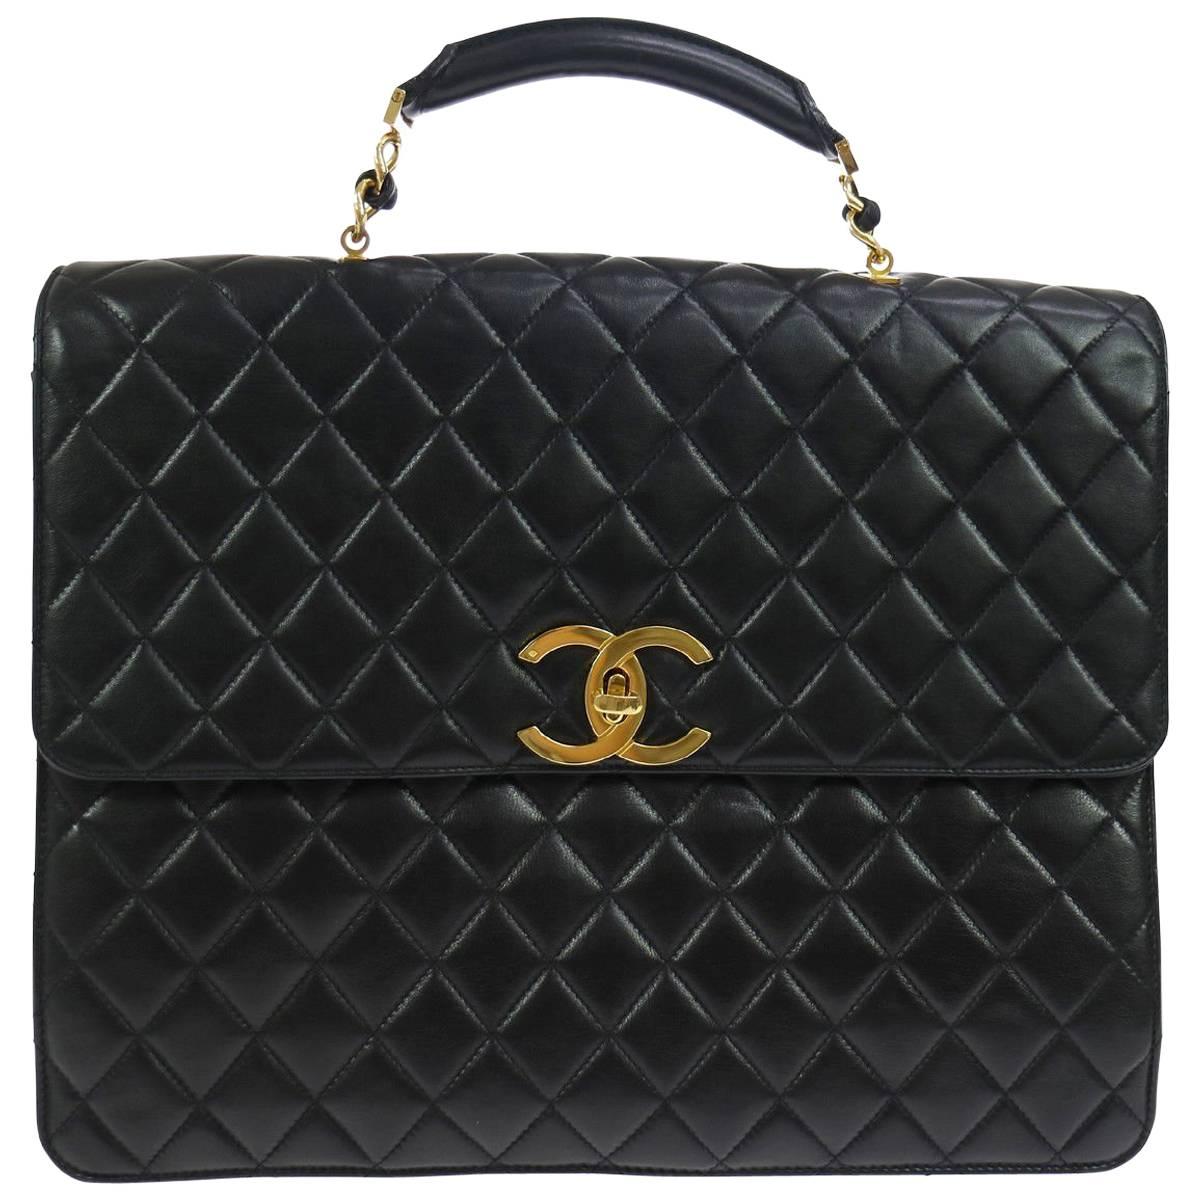 Chanel Black Lamb Travel Top Handle Satchel Briefcase Bag